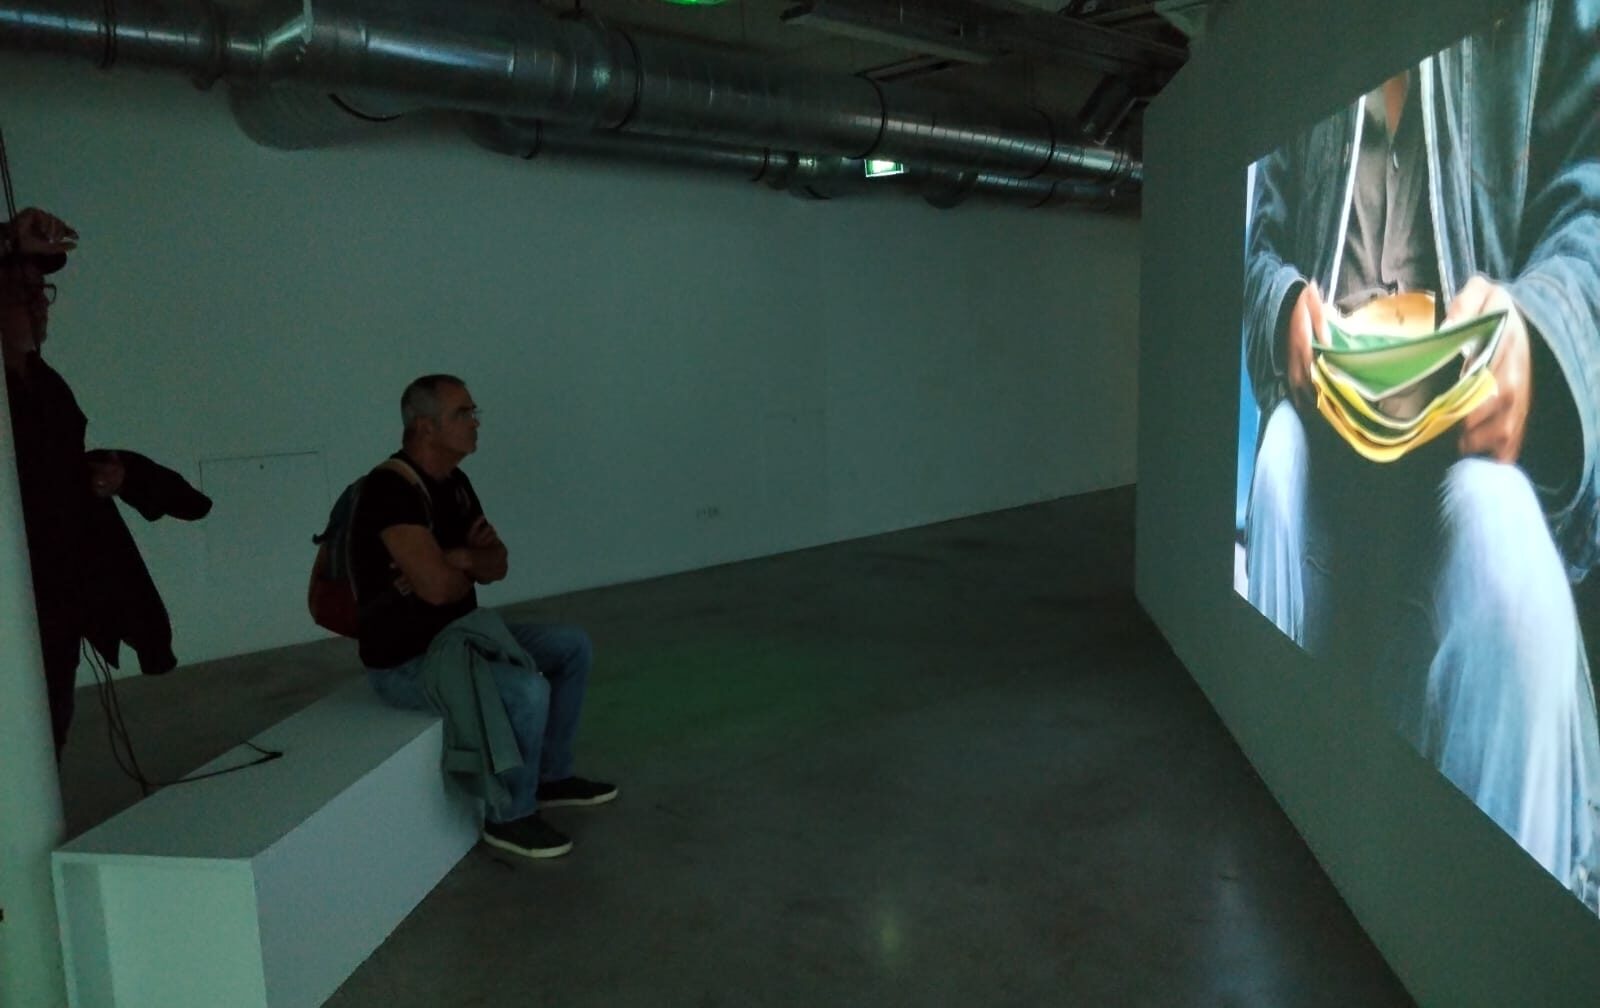 exposition instants video enrique ramirez cruzar un muro